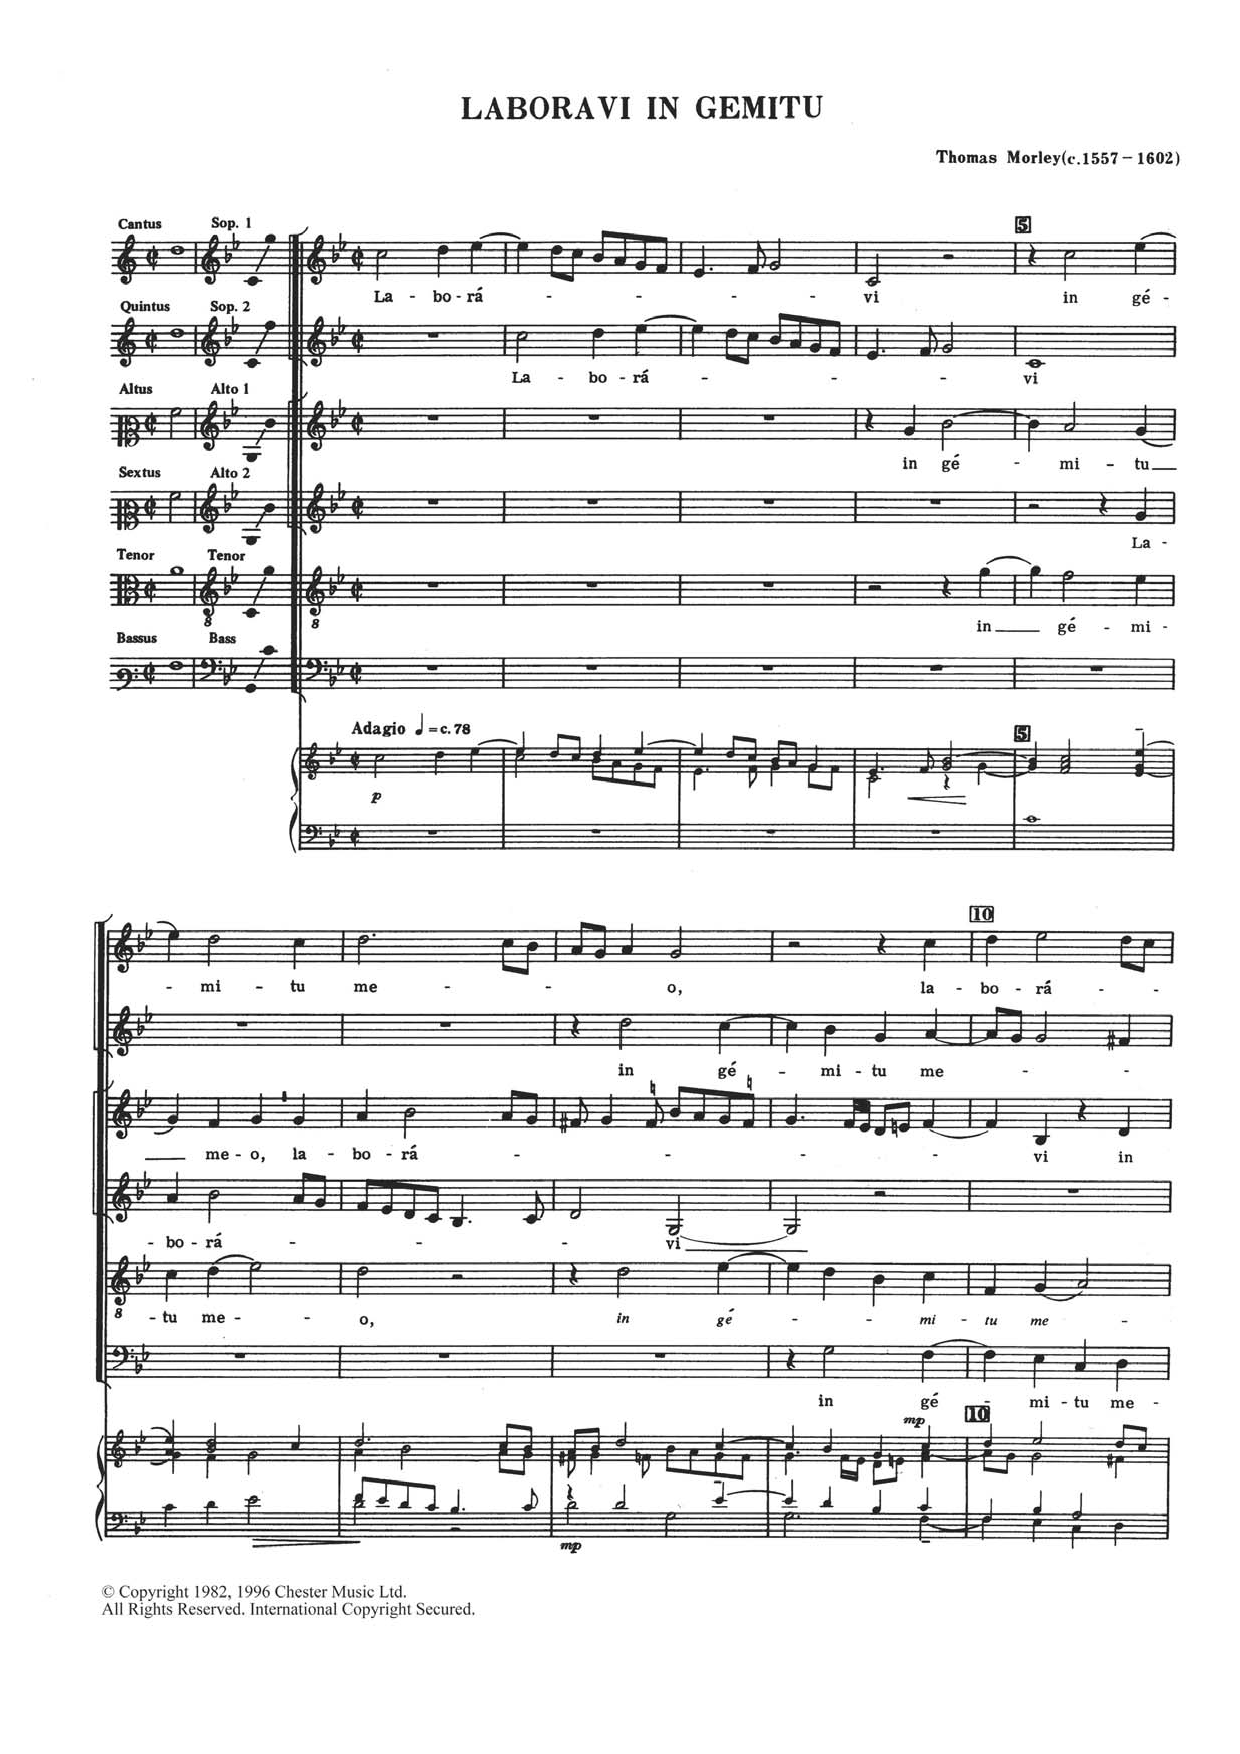 Thomas Morley Laboravi In Gemitu sheet music notes and chords. Download Printable PDF.